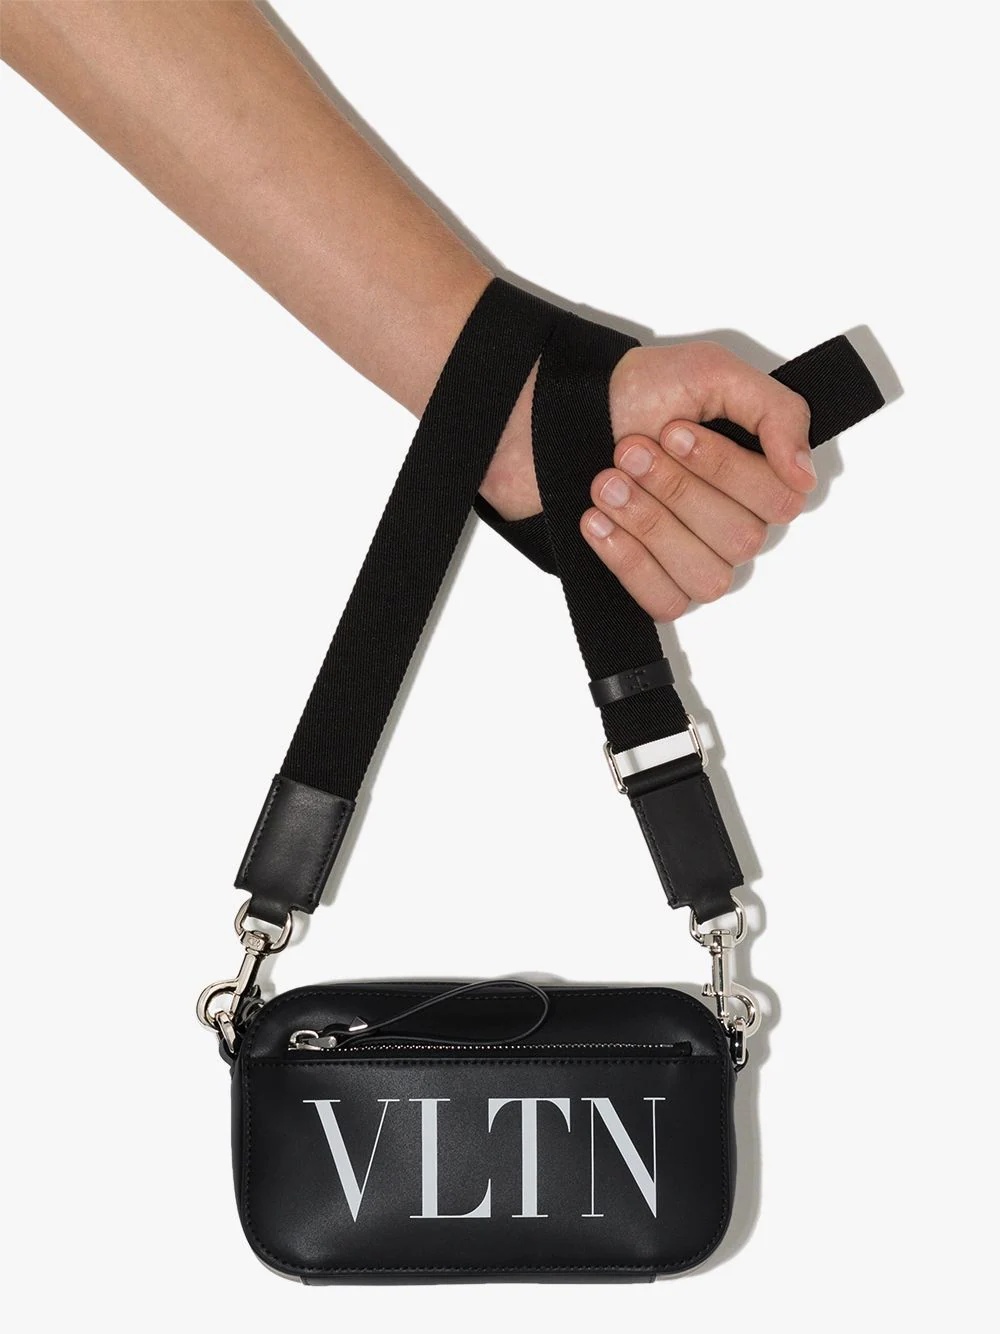 VLTN leather crossbody bag - 4